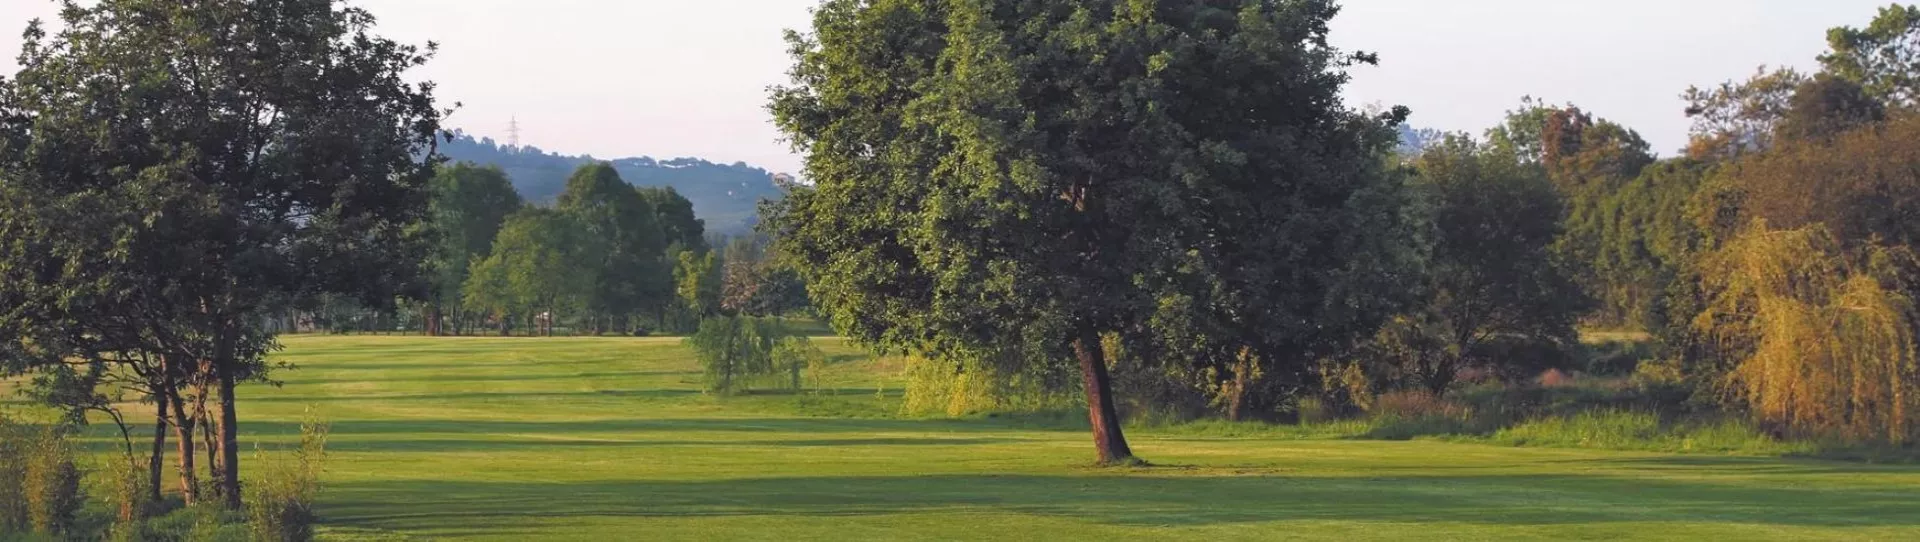 Spain golf courses - La Morgal Golf Course - Photo 1